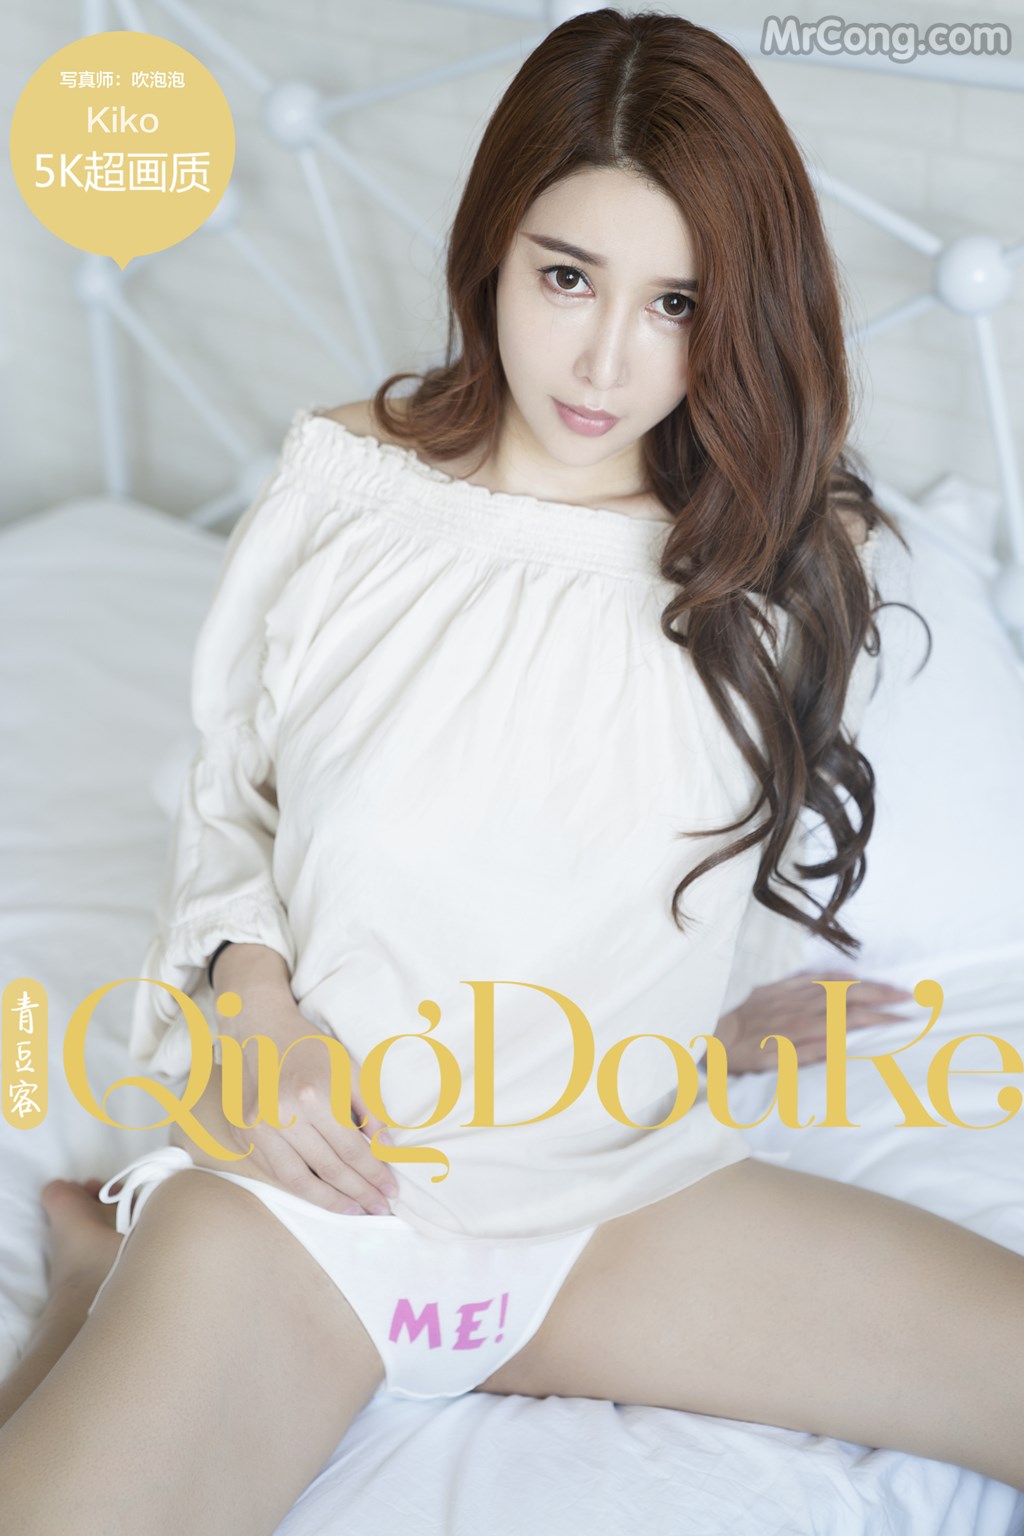 QingDouKe 2017-05-29: Model Kiko (52 photos)